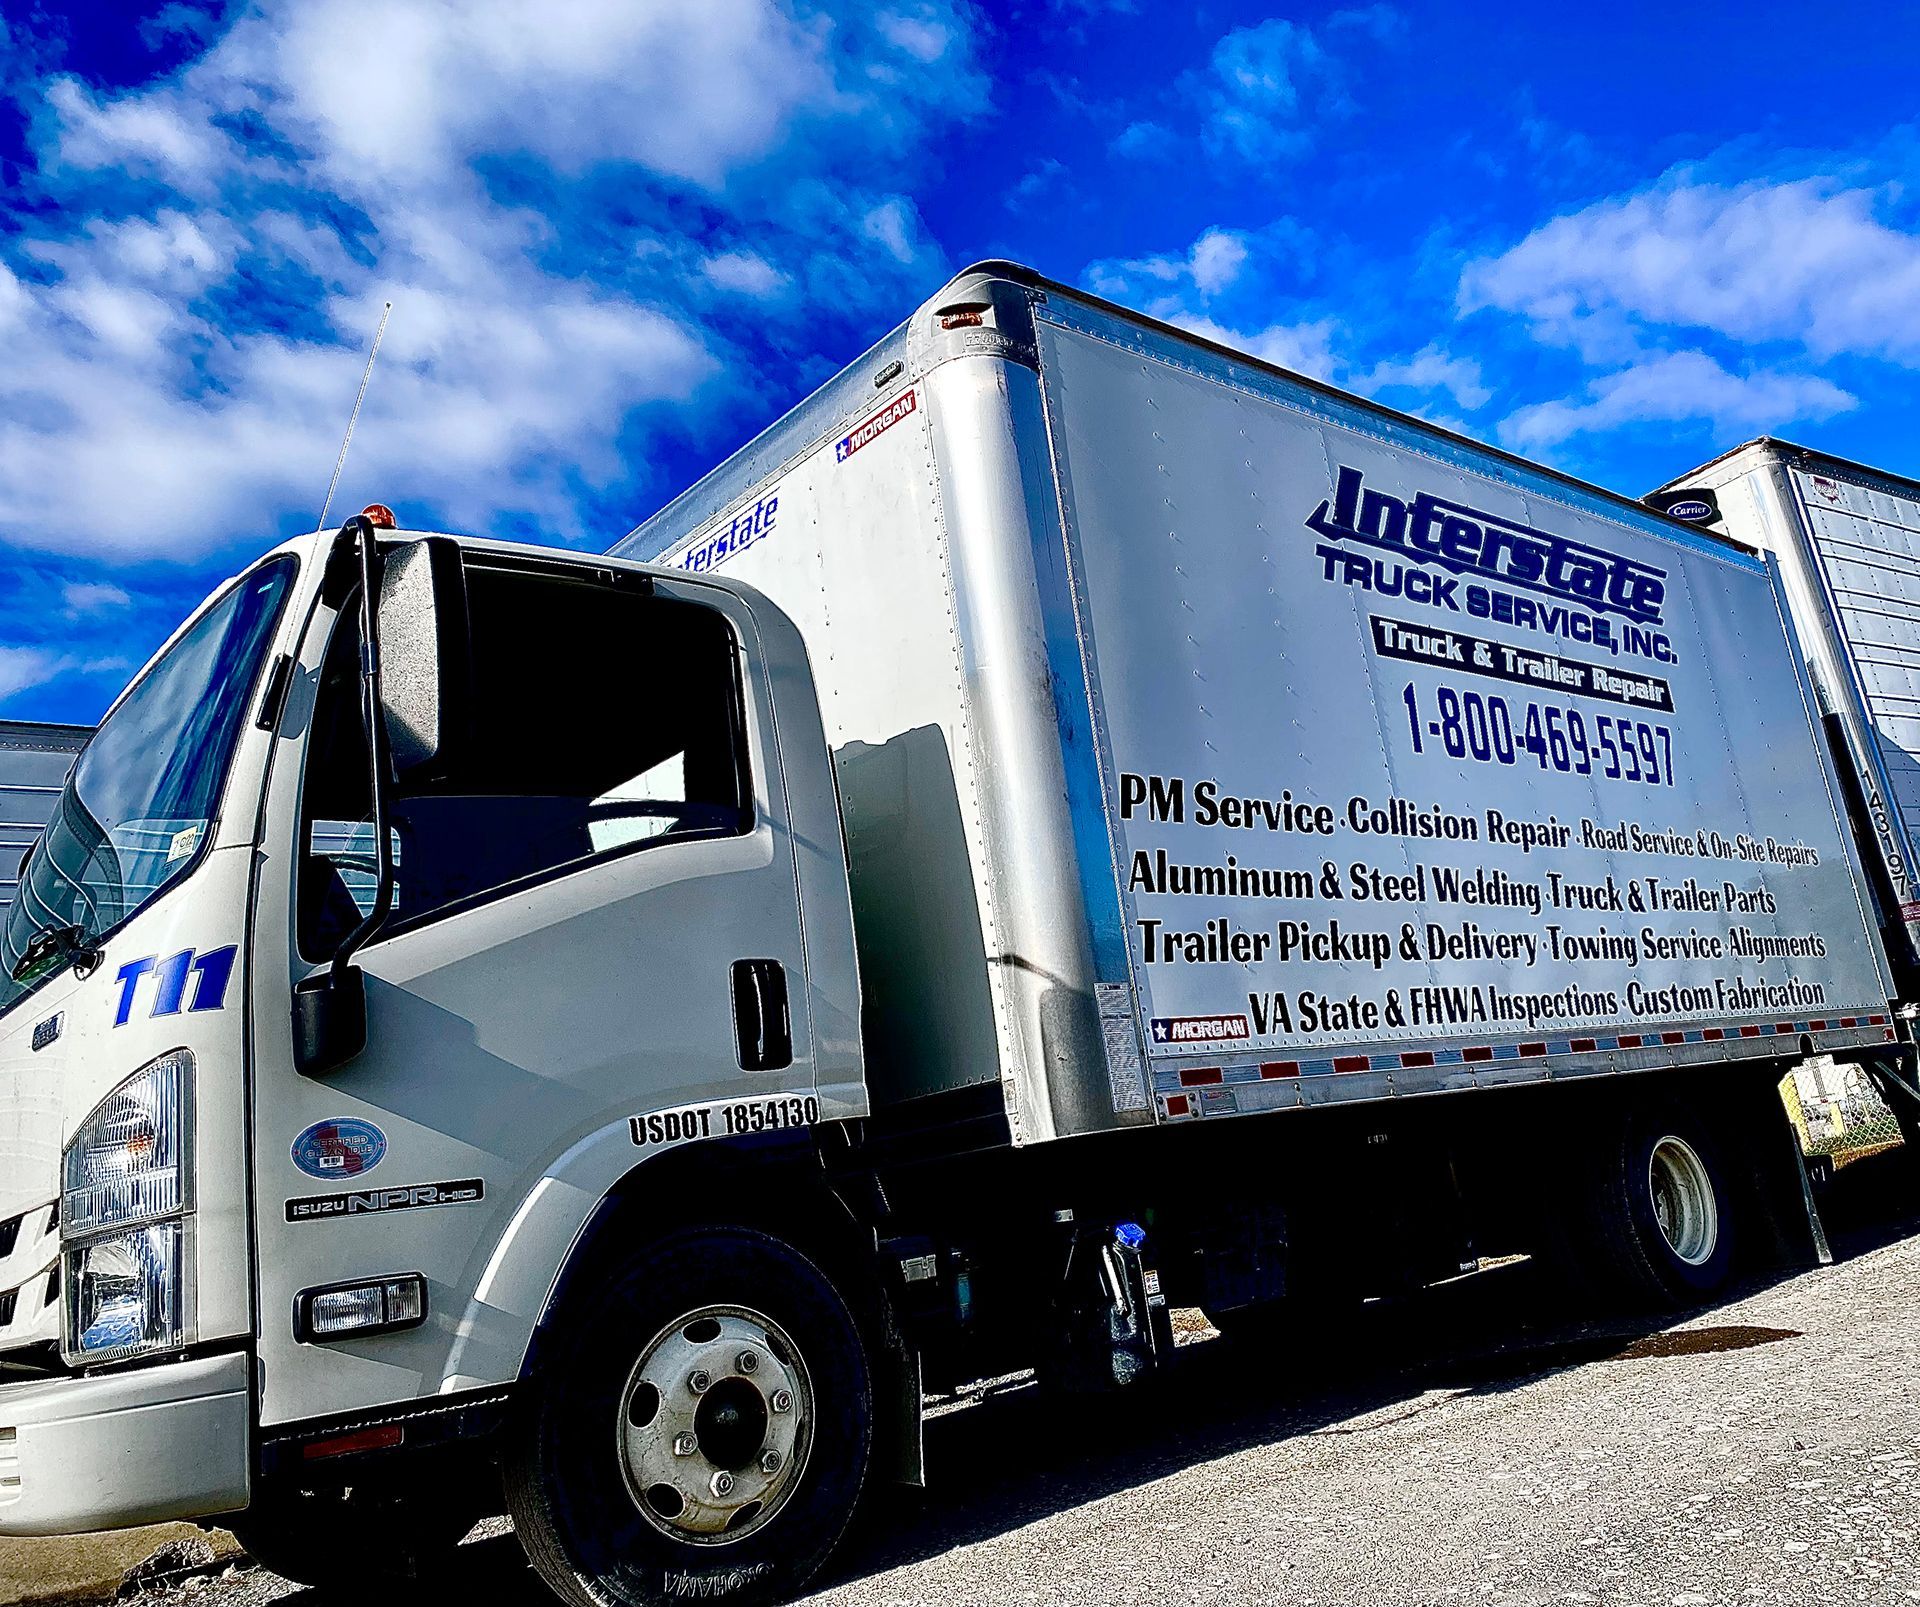 Interstate Truck Service Inc's white truck